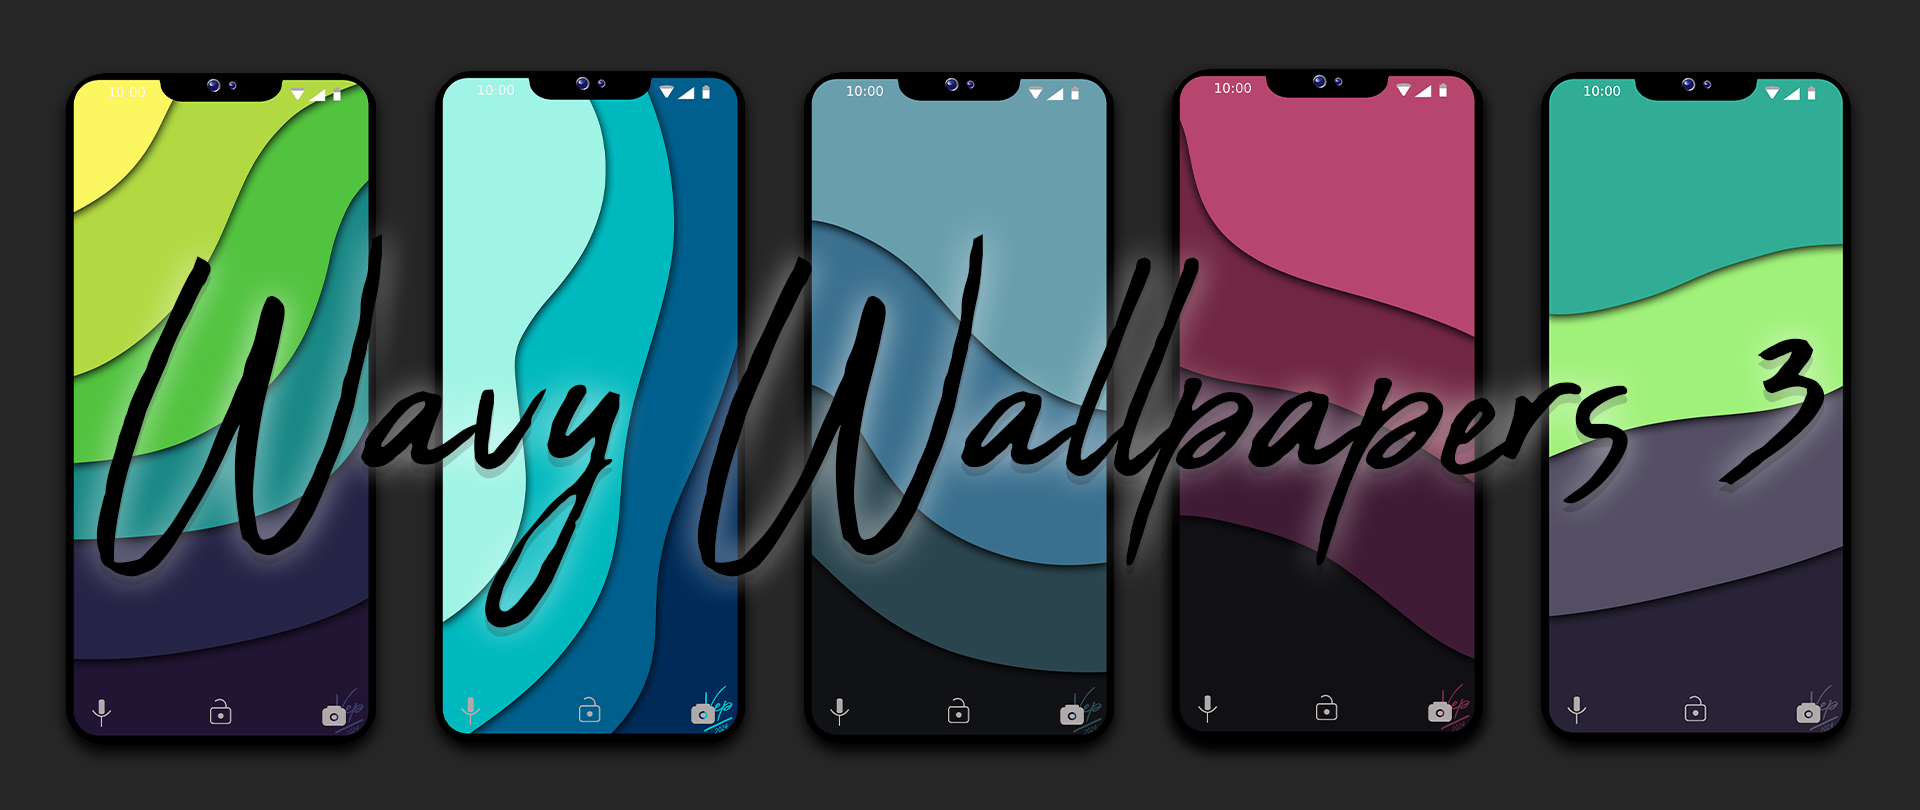 Wavy Wallpapers 3